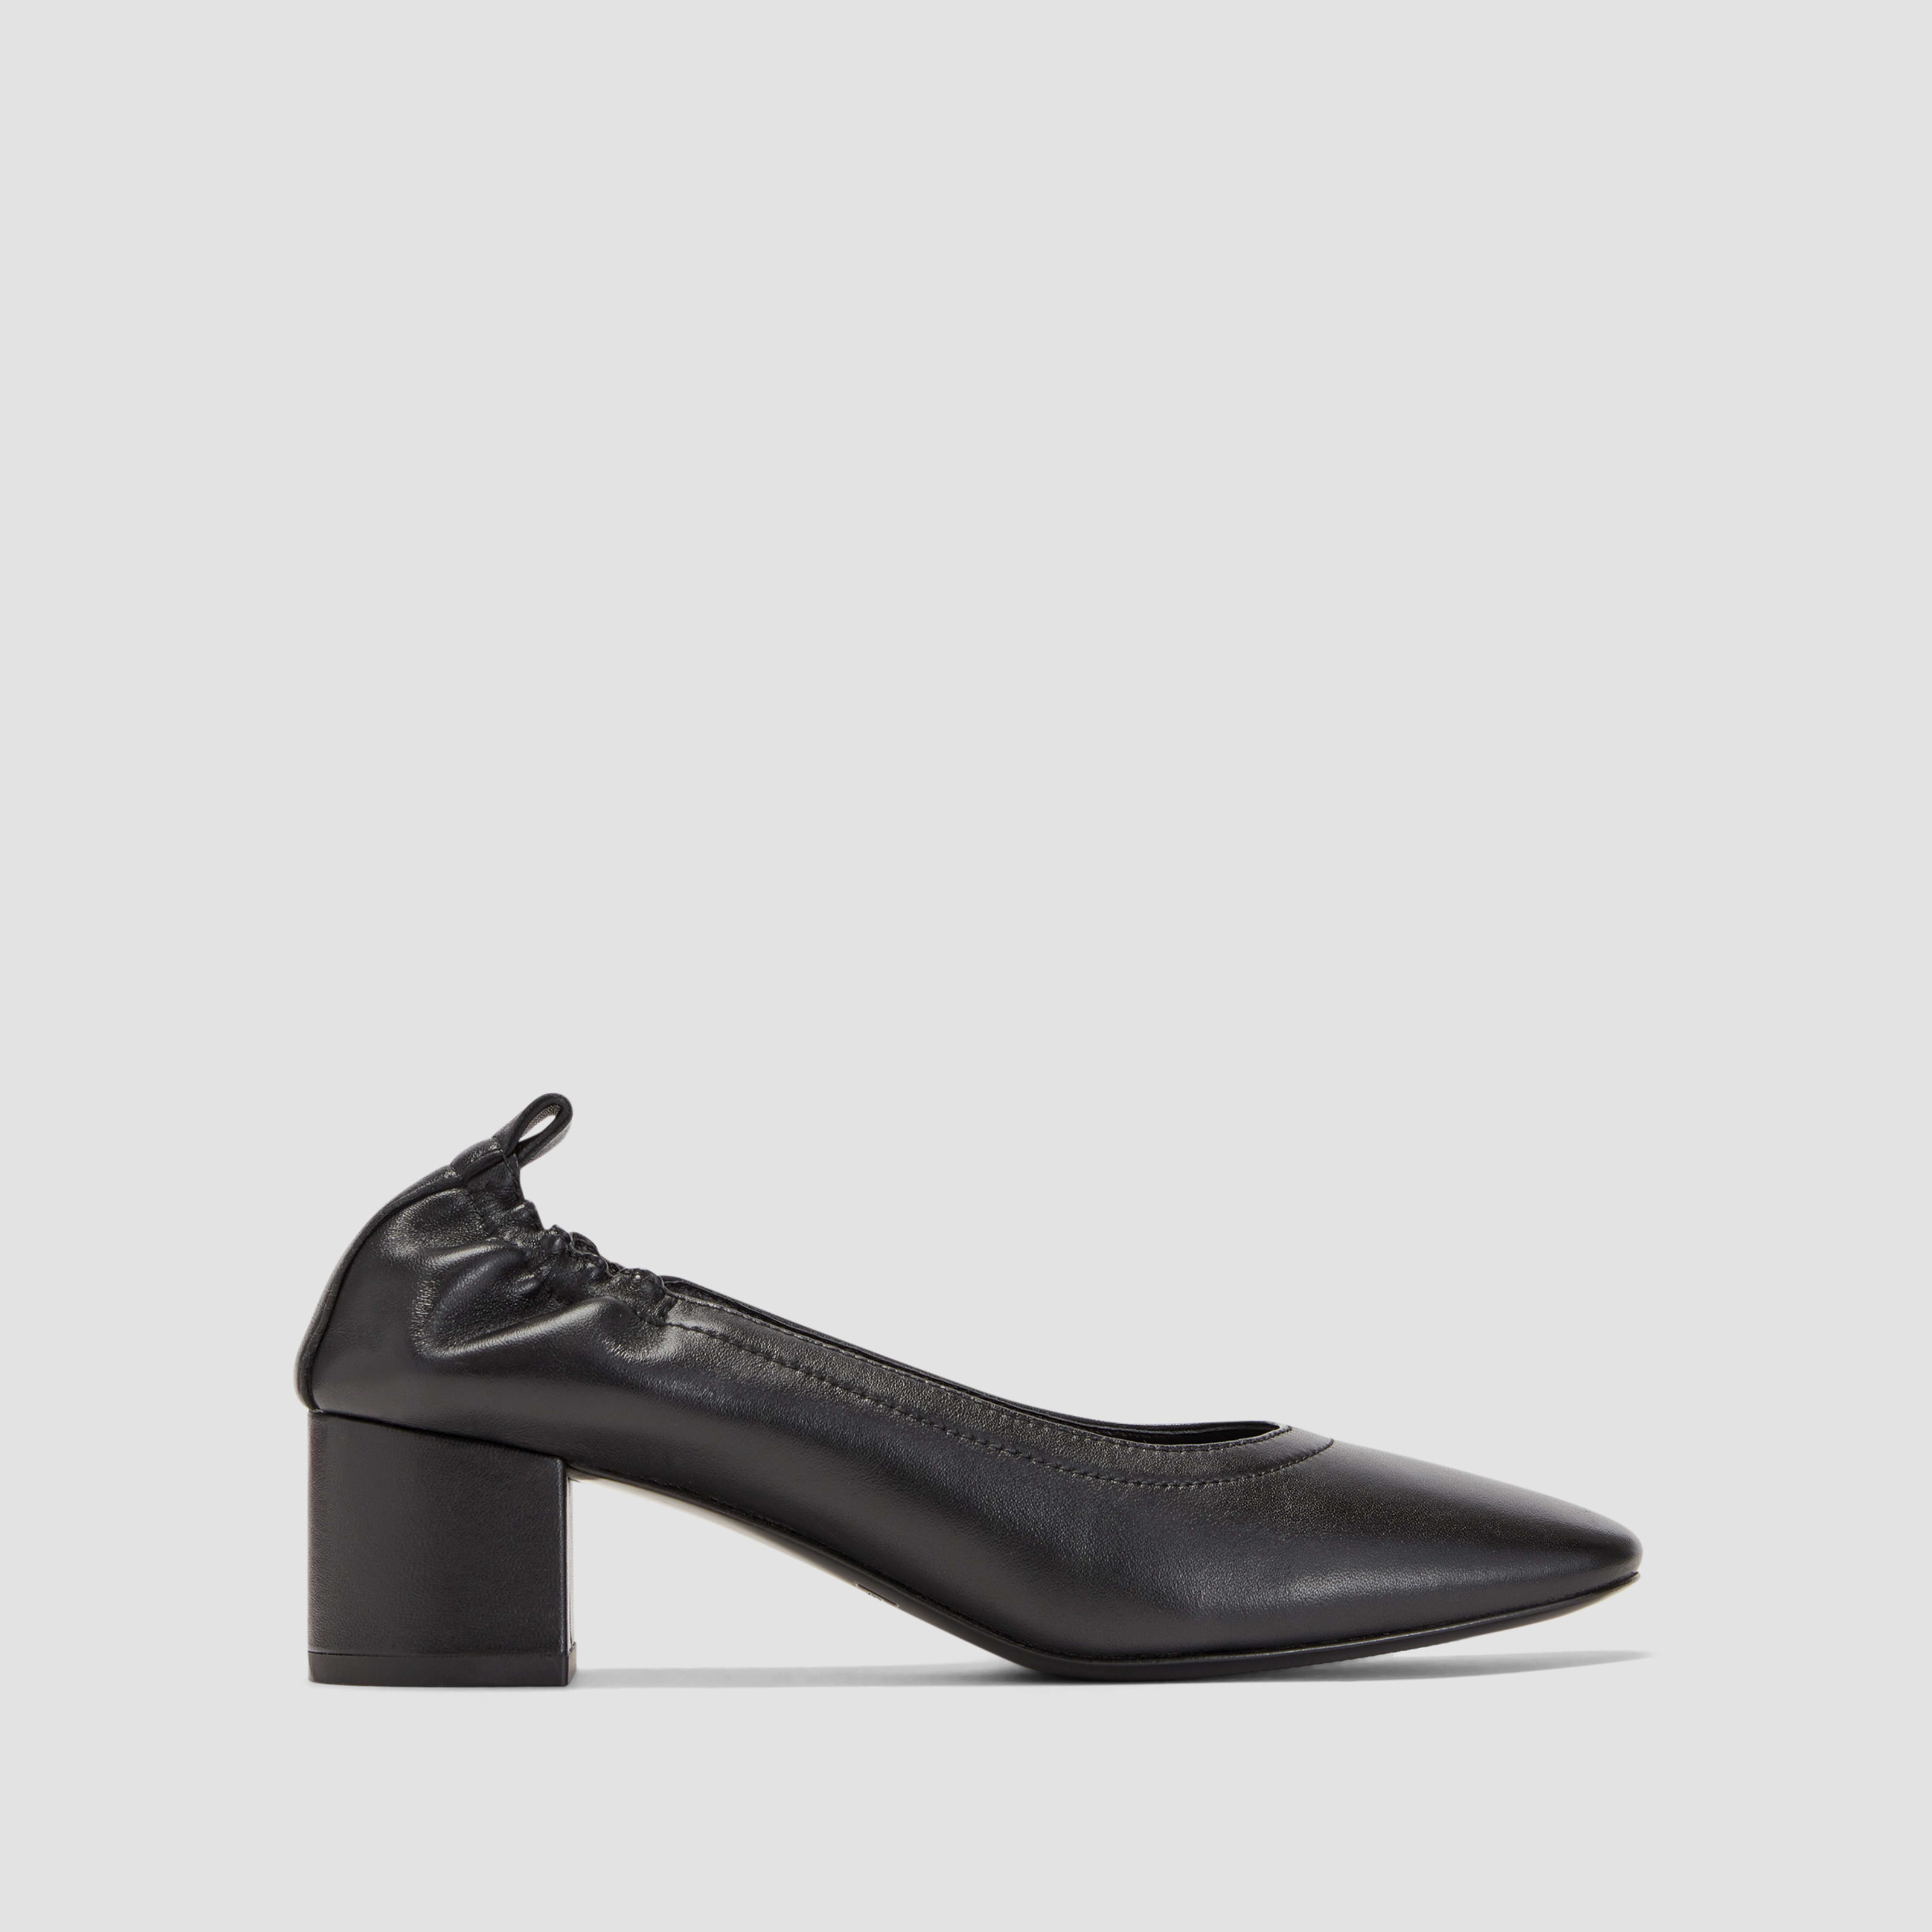 pump heel by everlane in black, size 5